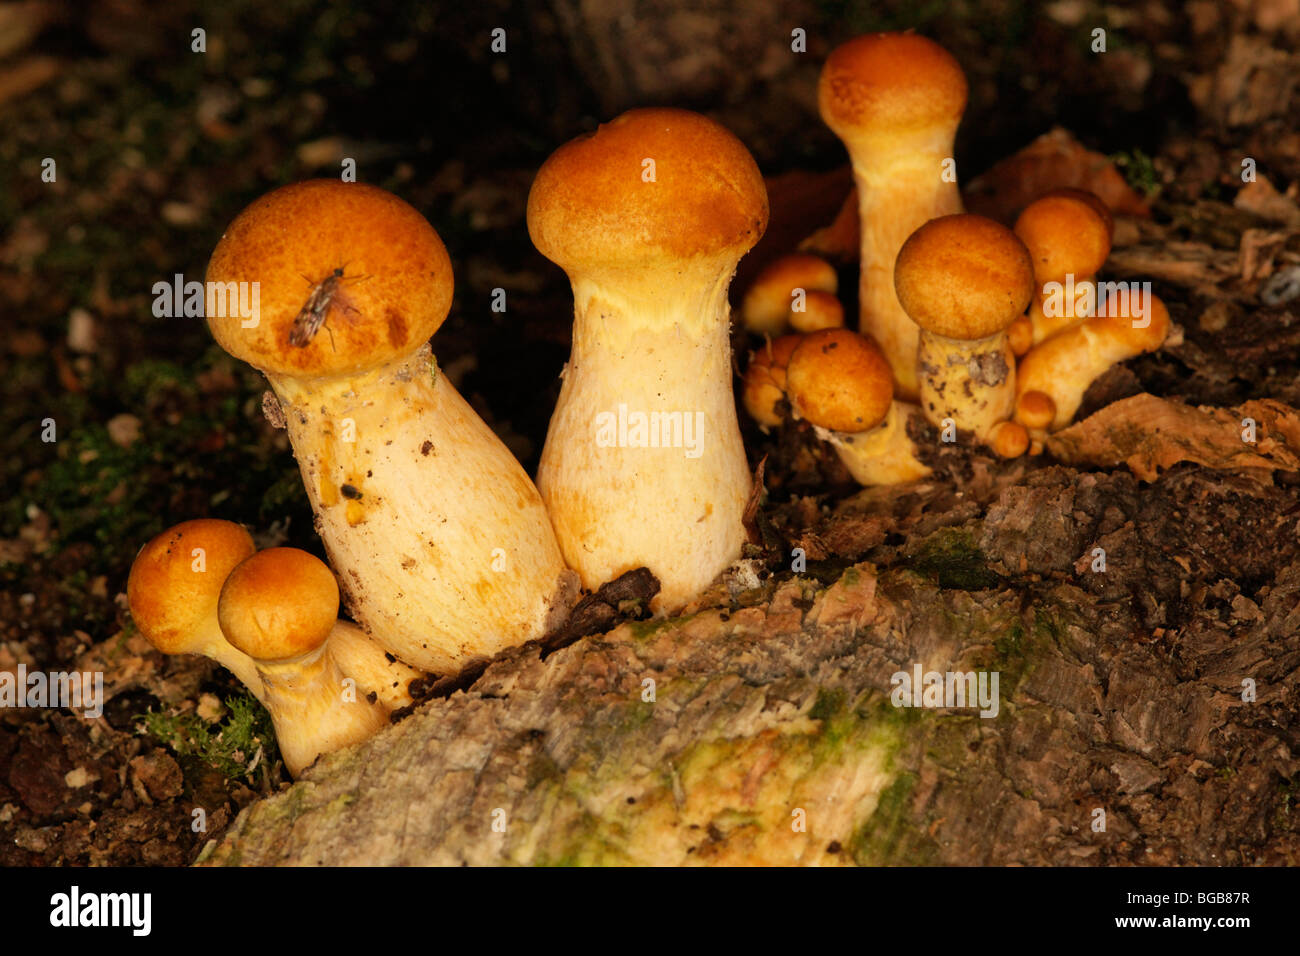 Fungal fruiting body on a tree stump Stock Photo